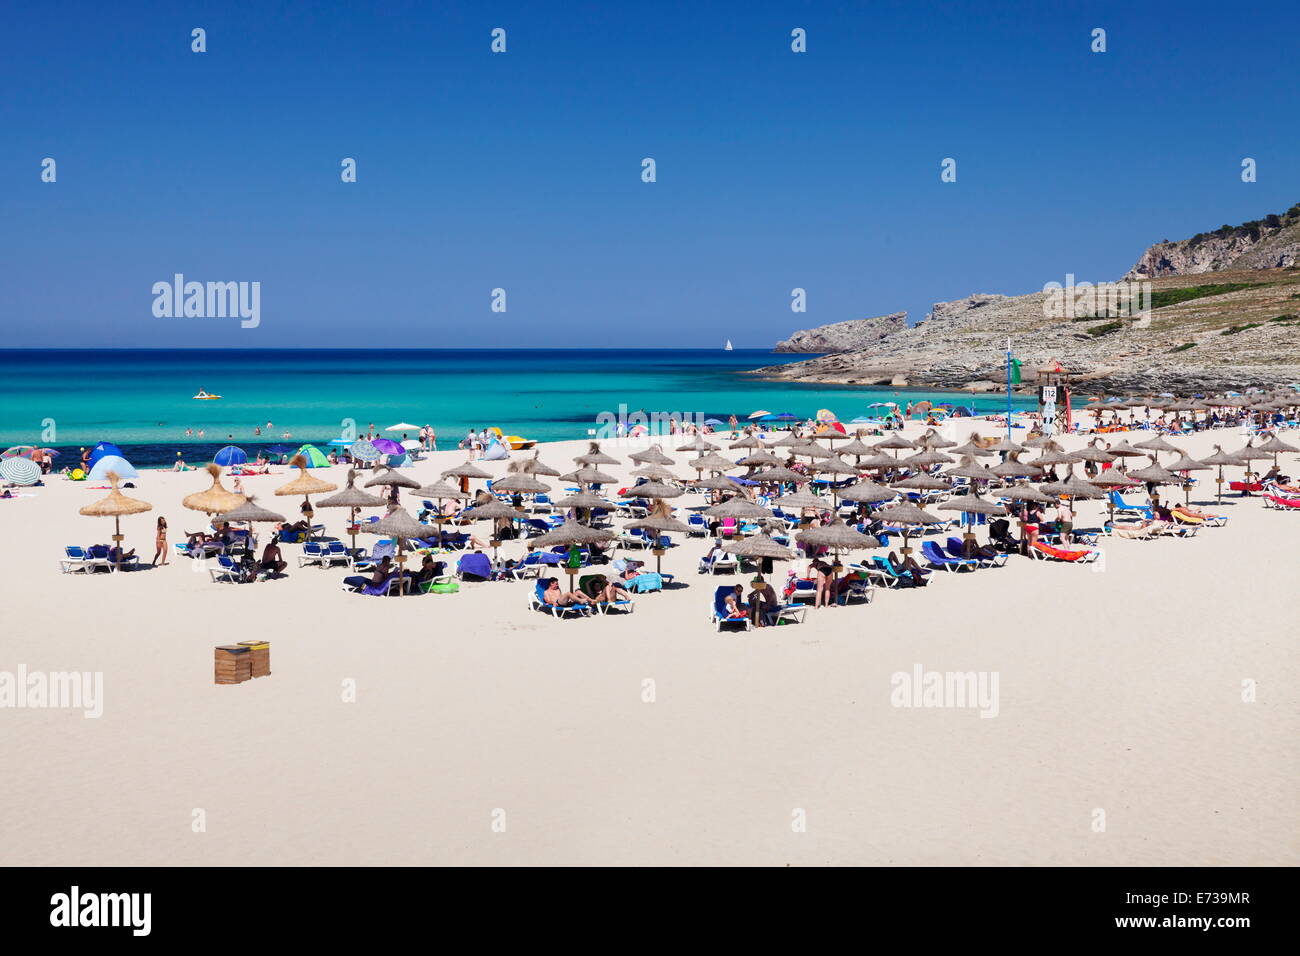 Strand und die Bucht Cala Mesquita, Capdepera, Mallorca (Mallorca), Balearische Inseln (Islas Baleares), Spanien, Mittelmeer, Europa Stockfoto